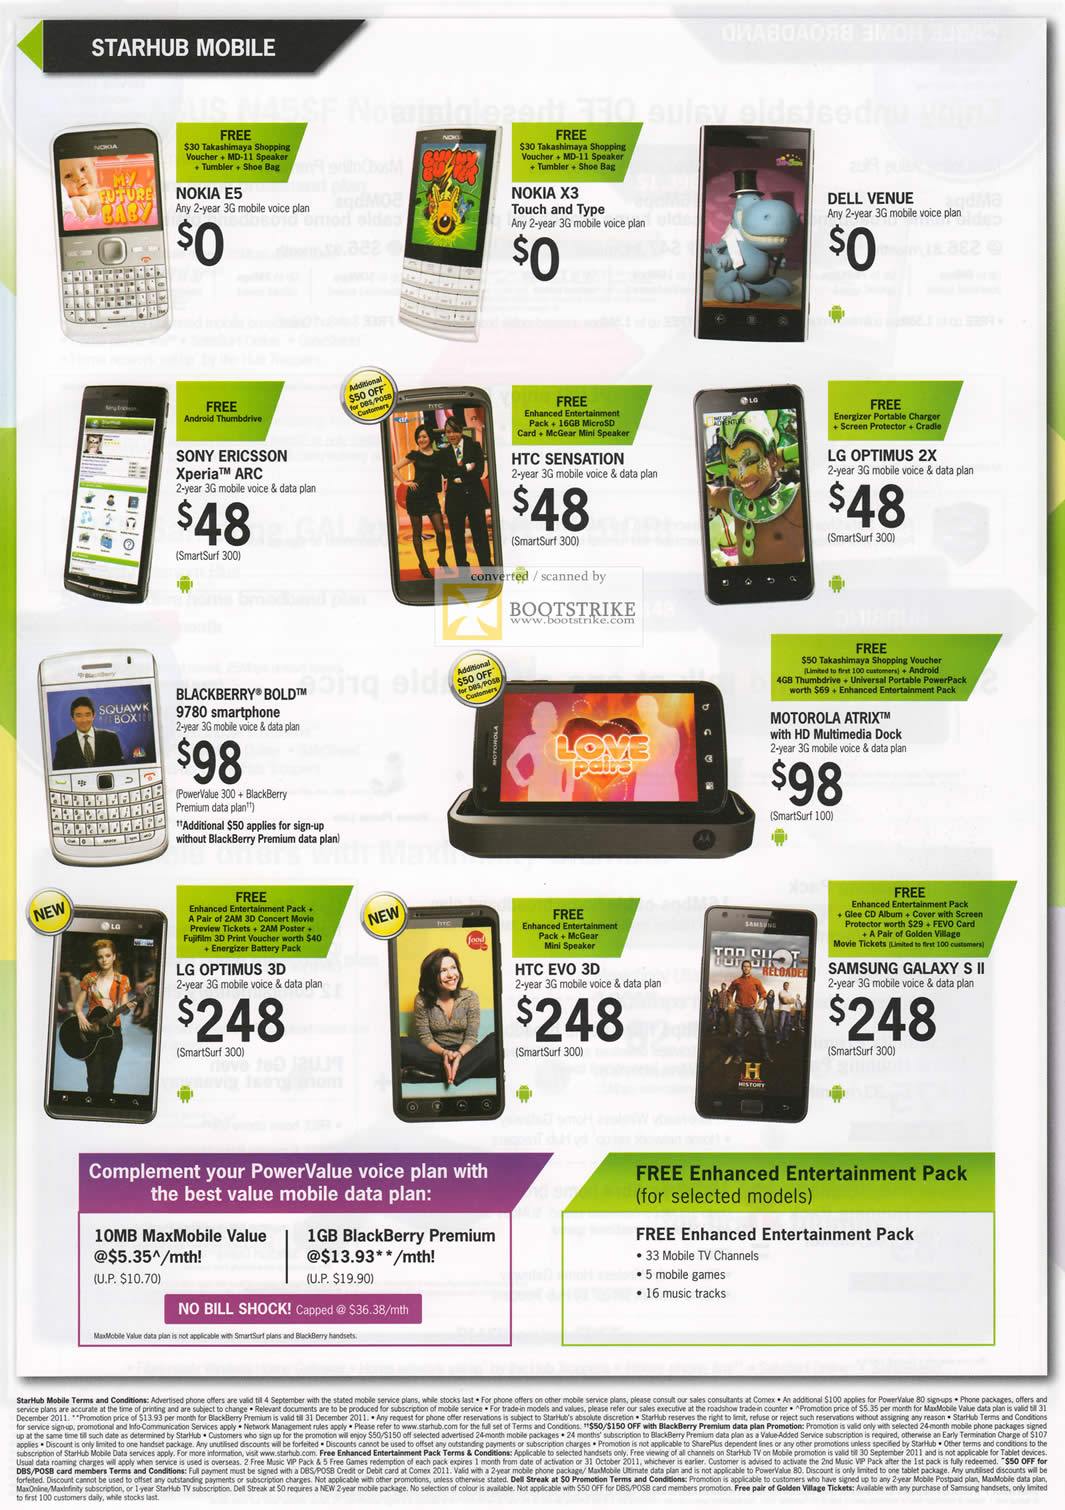 COMEX 2011 price list image brochure of Starhub Mobile Phones Nokia E5 X3 Dell Venue Sony Ericsson Xperia Arc HTC Sensation Evo 3D LG Optimus 3D 2X Blackberry Bold 9780 Motorola Atrix Samsung Galaxy S II